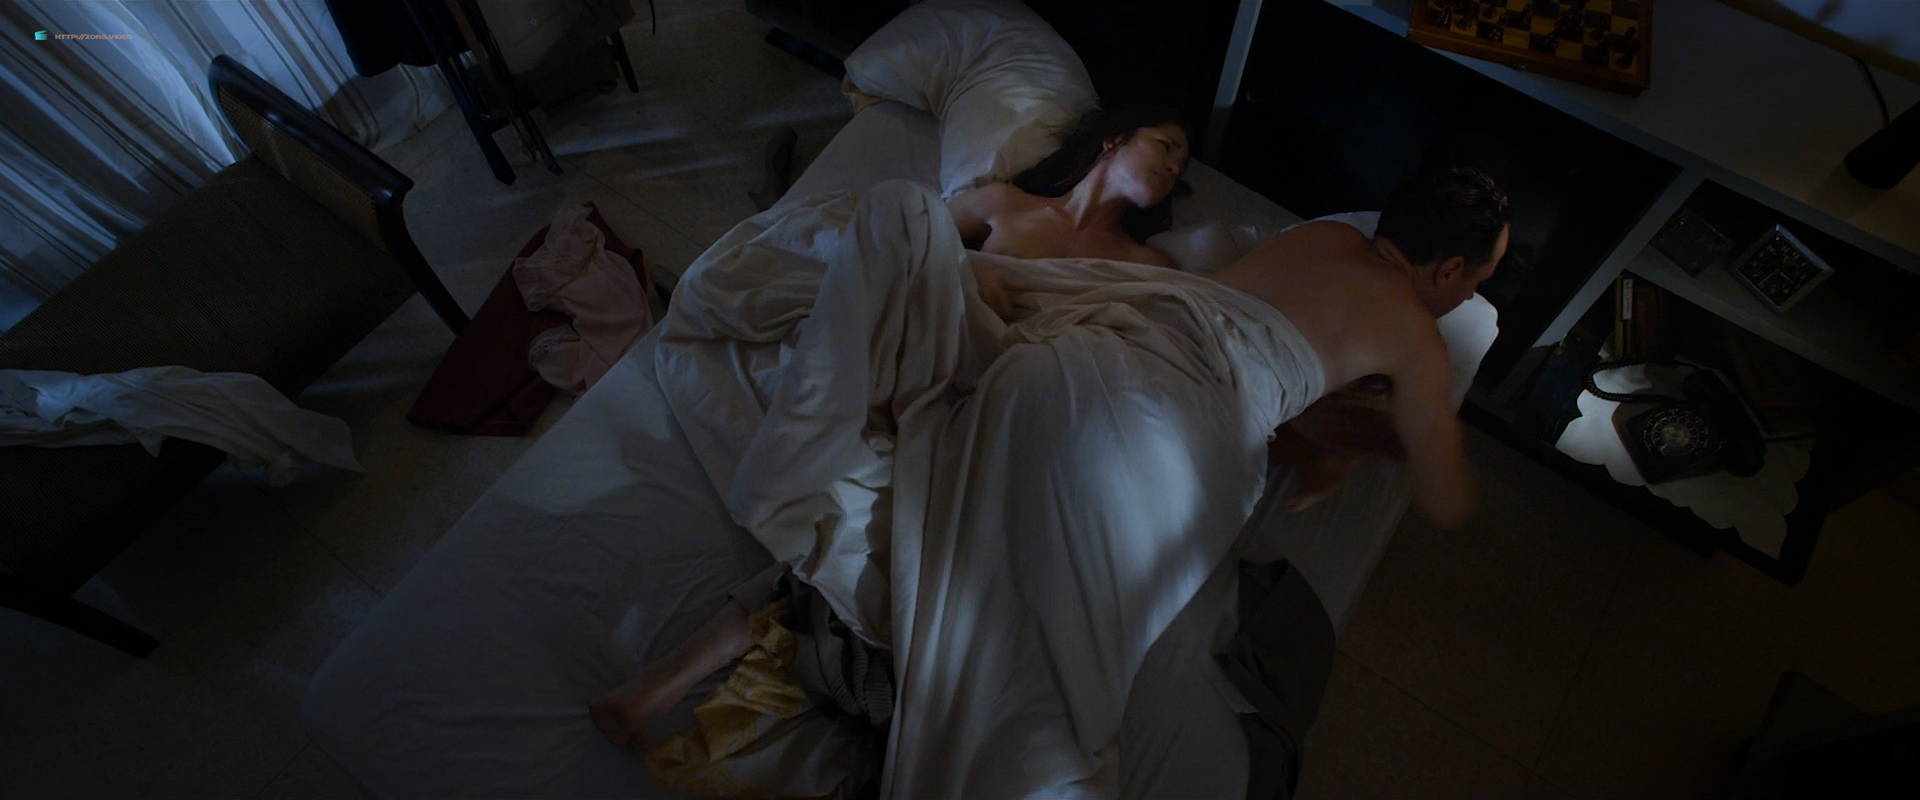 Minka Kelly nude butt Joely Richardson nude and skinny dipping - Papa Hemingway in Cuba (2015) HD 1080p web (5)